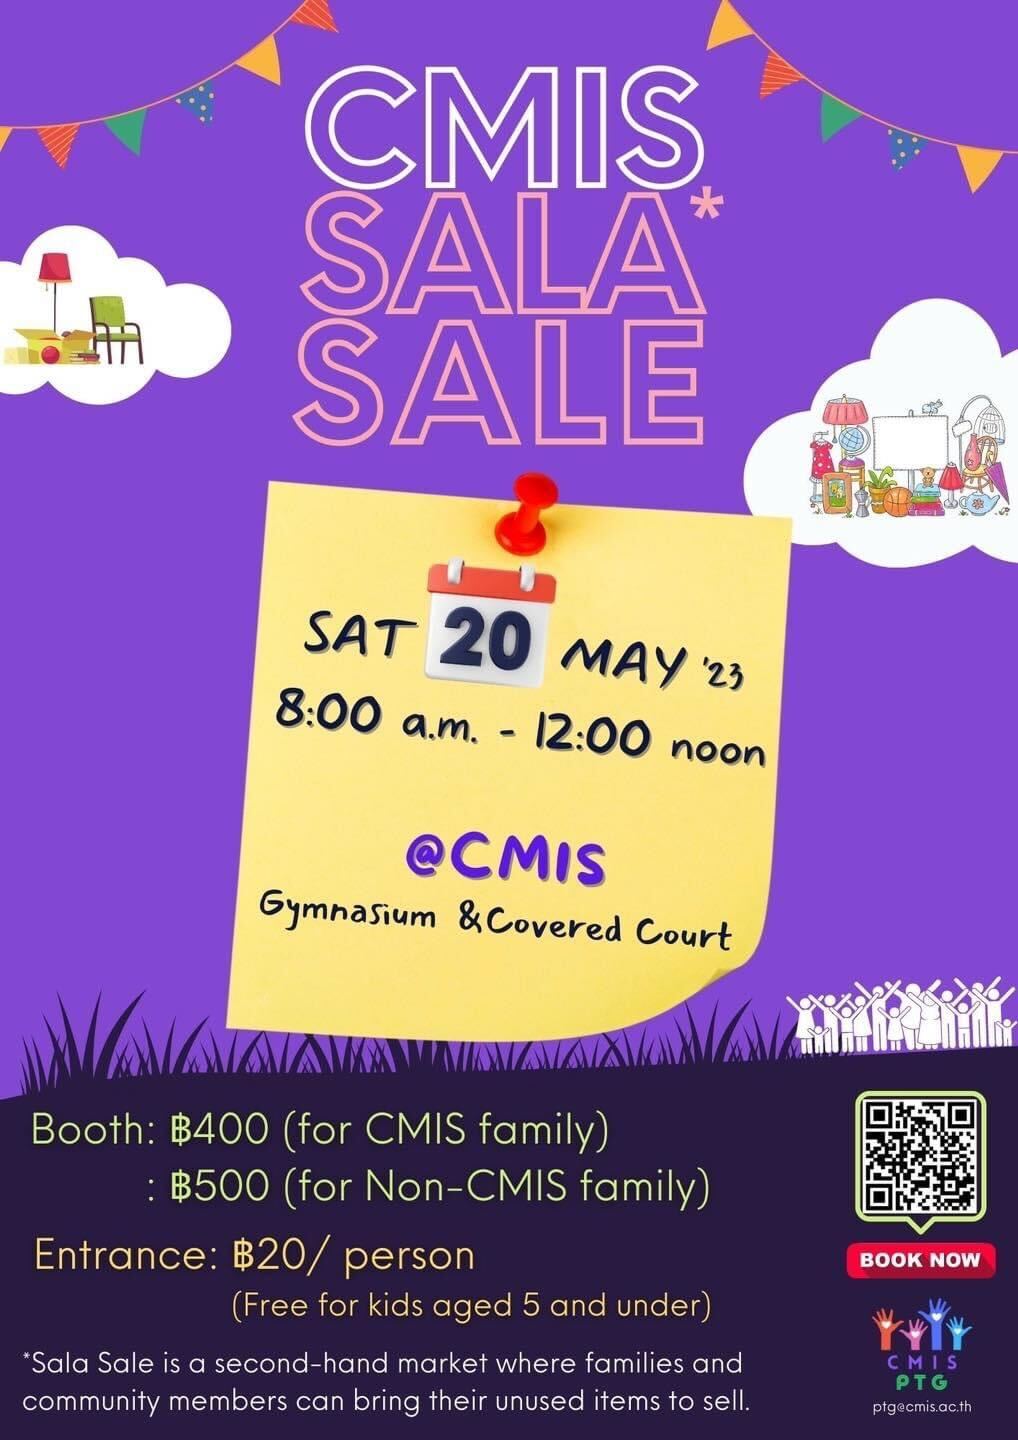 CMIS Chiang Mai International School - CMIS Sala Sale